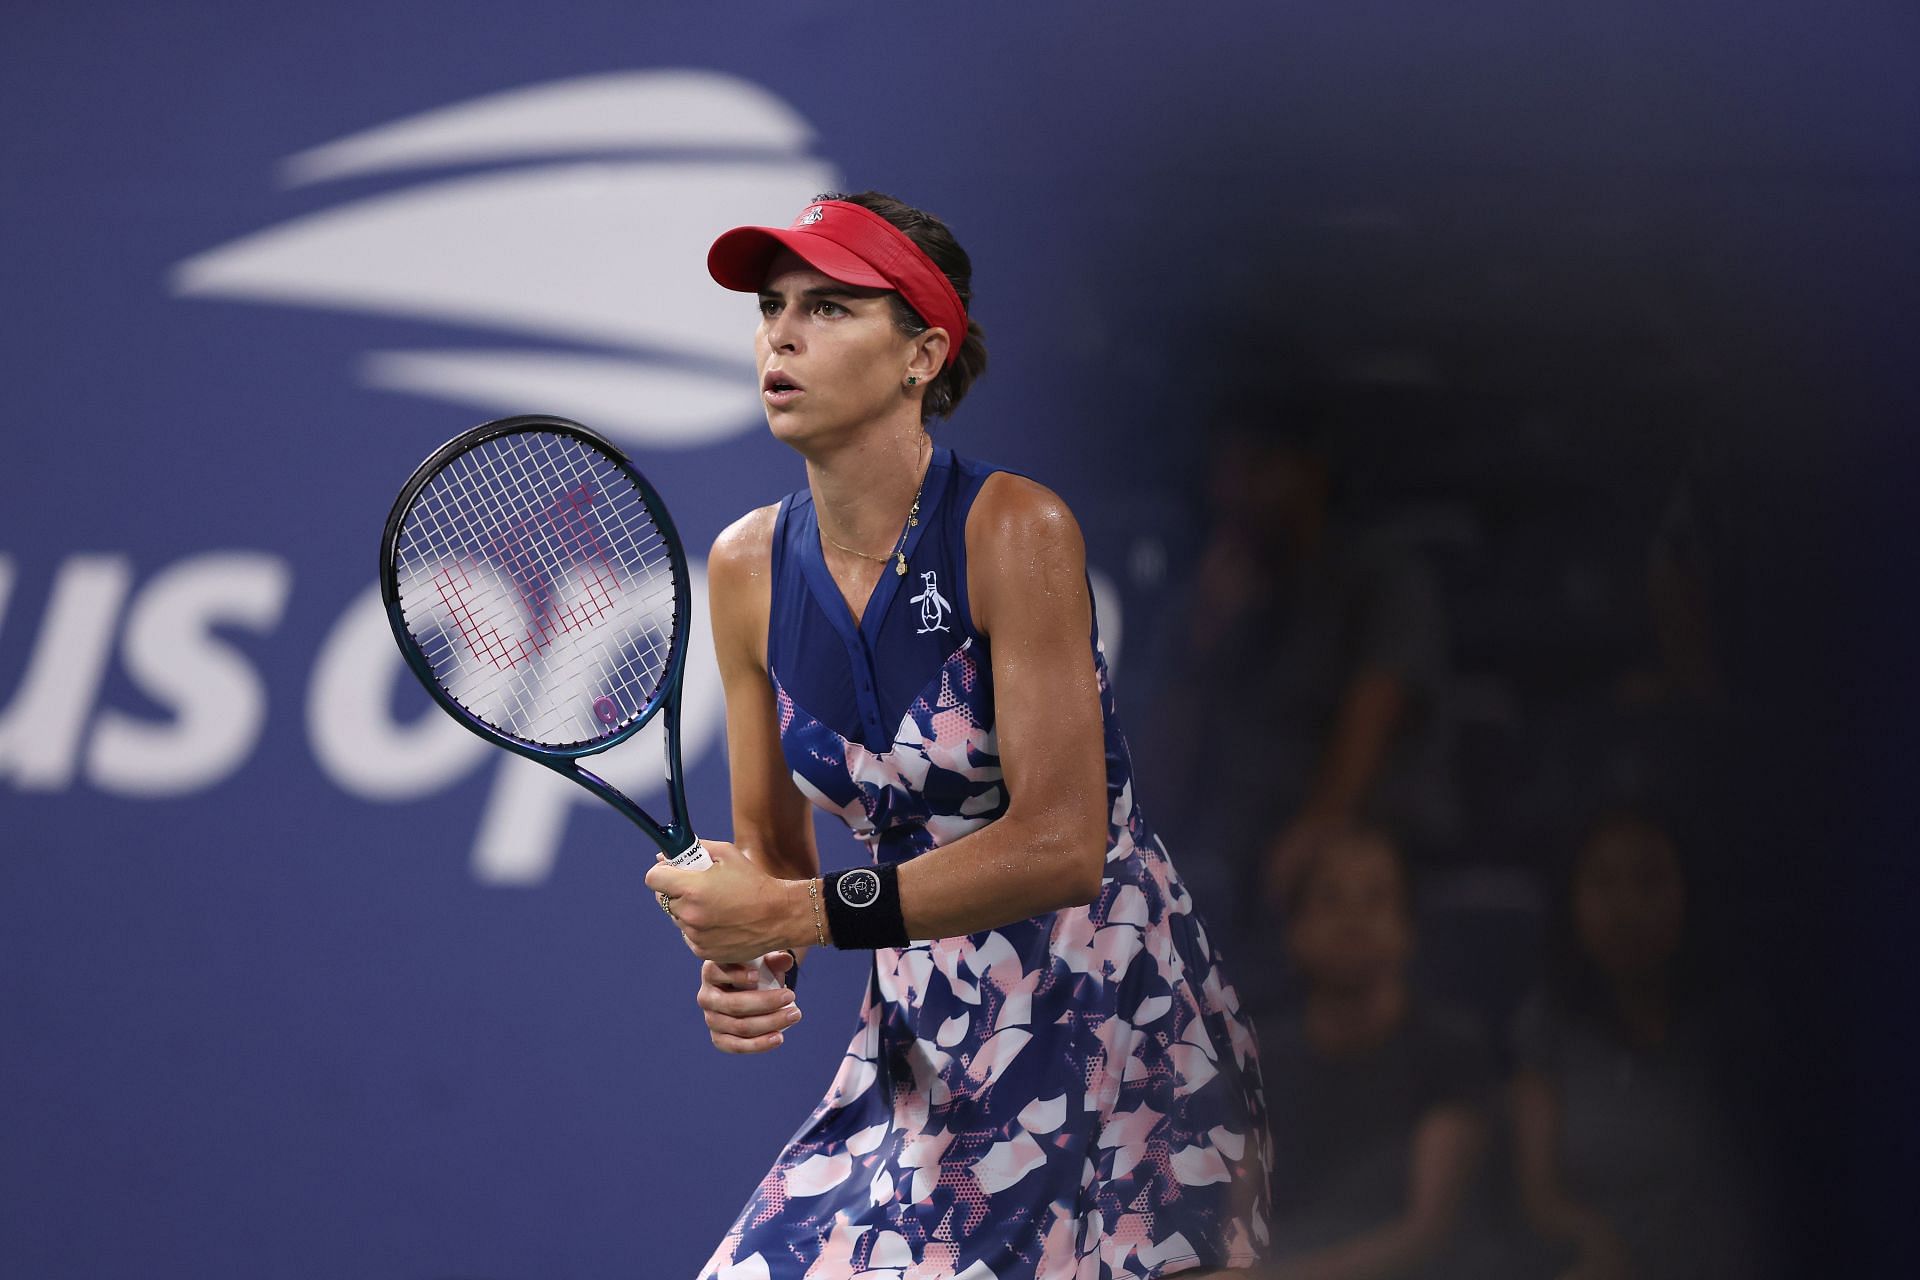 Ajla Tomljanović of Australia returns against Ludmilla Samsonova at the 2022 US Open - Day 7